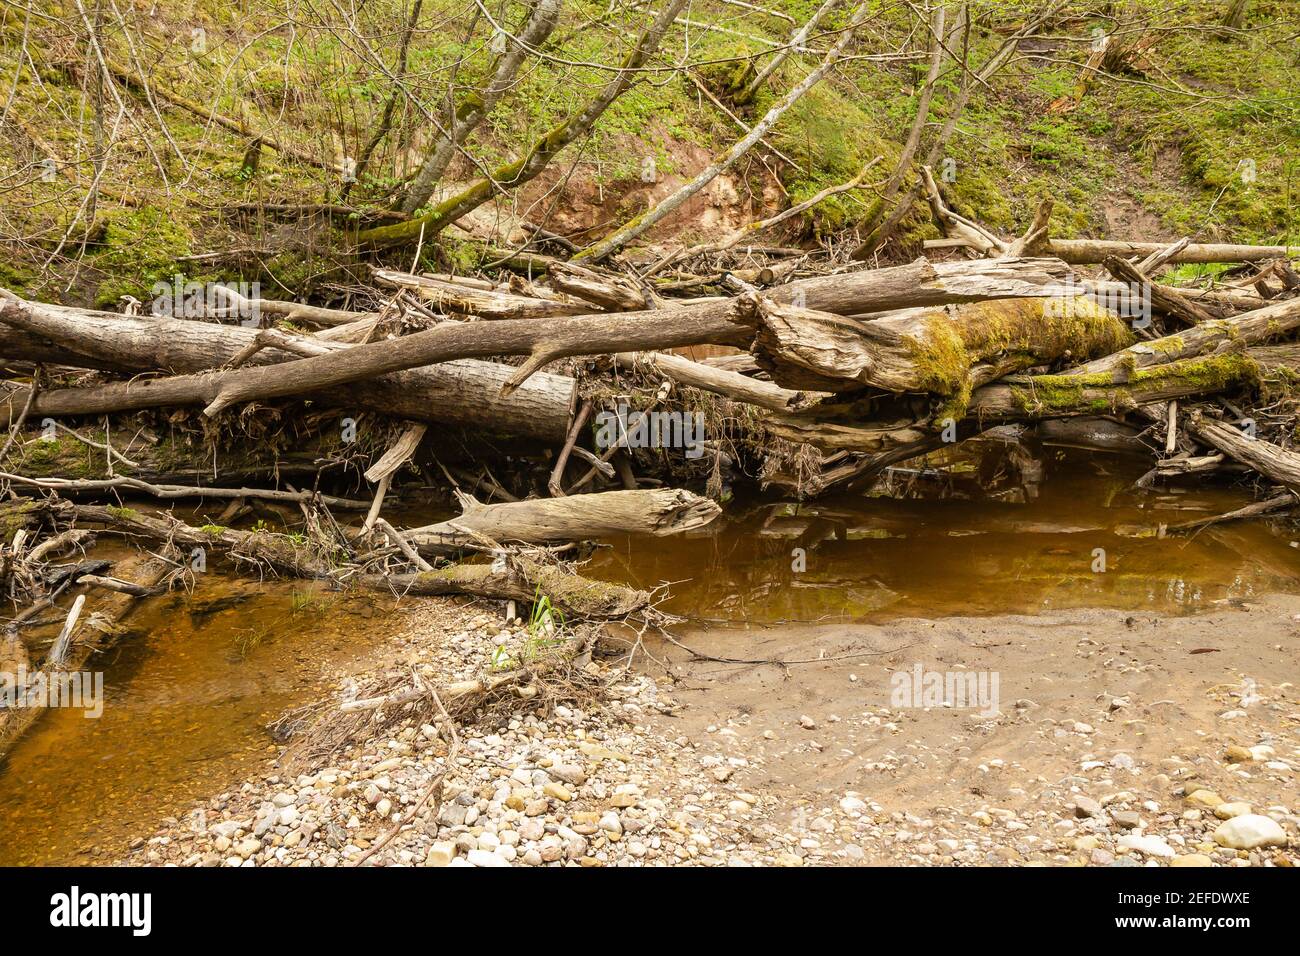 Sedimentation of fallen trees in the river Stock Photo